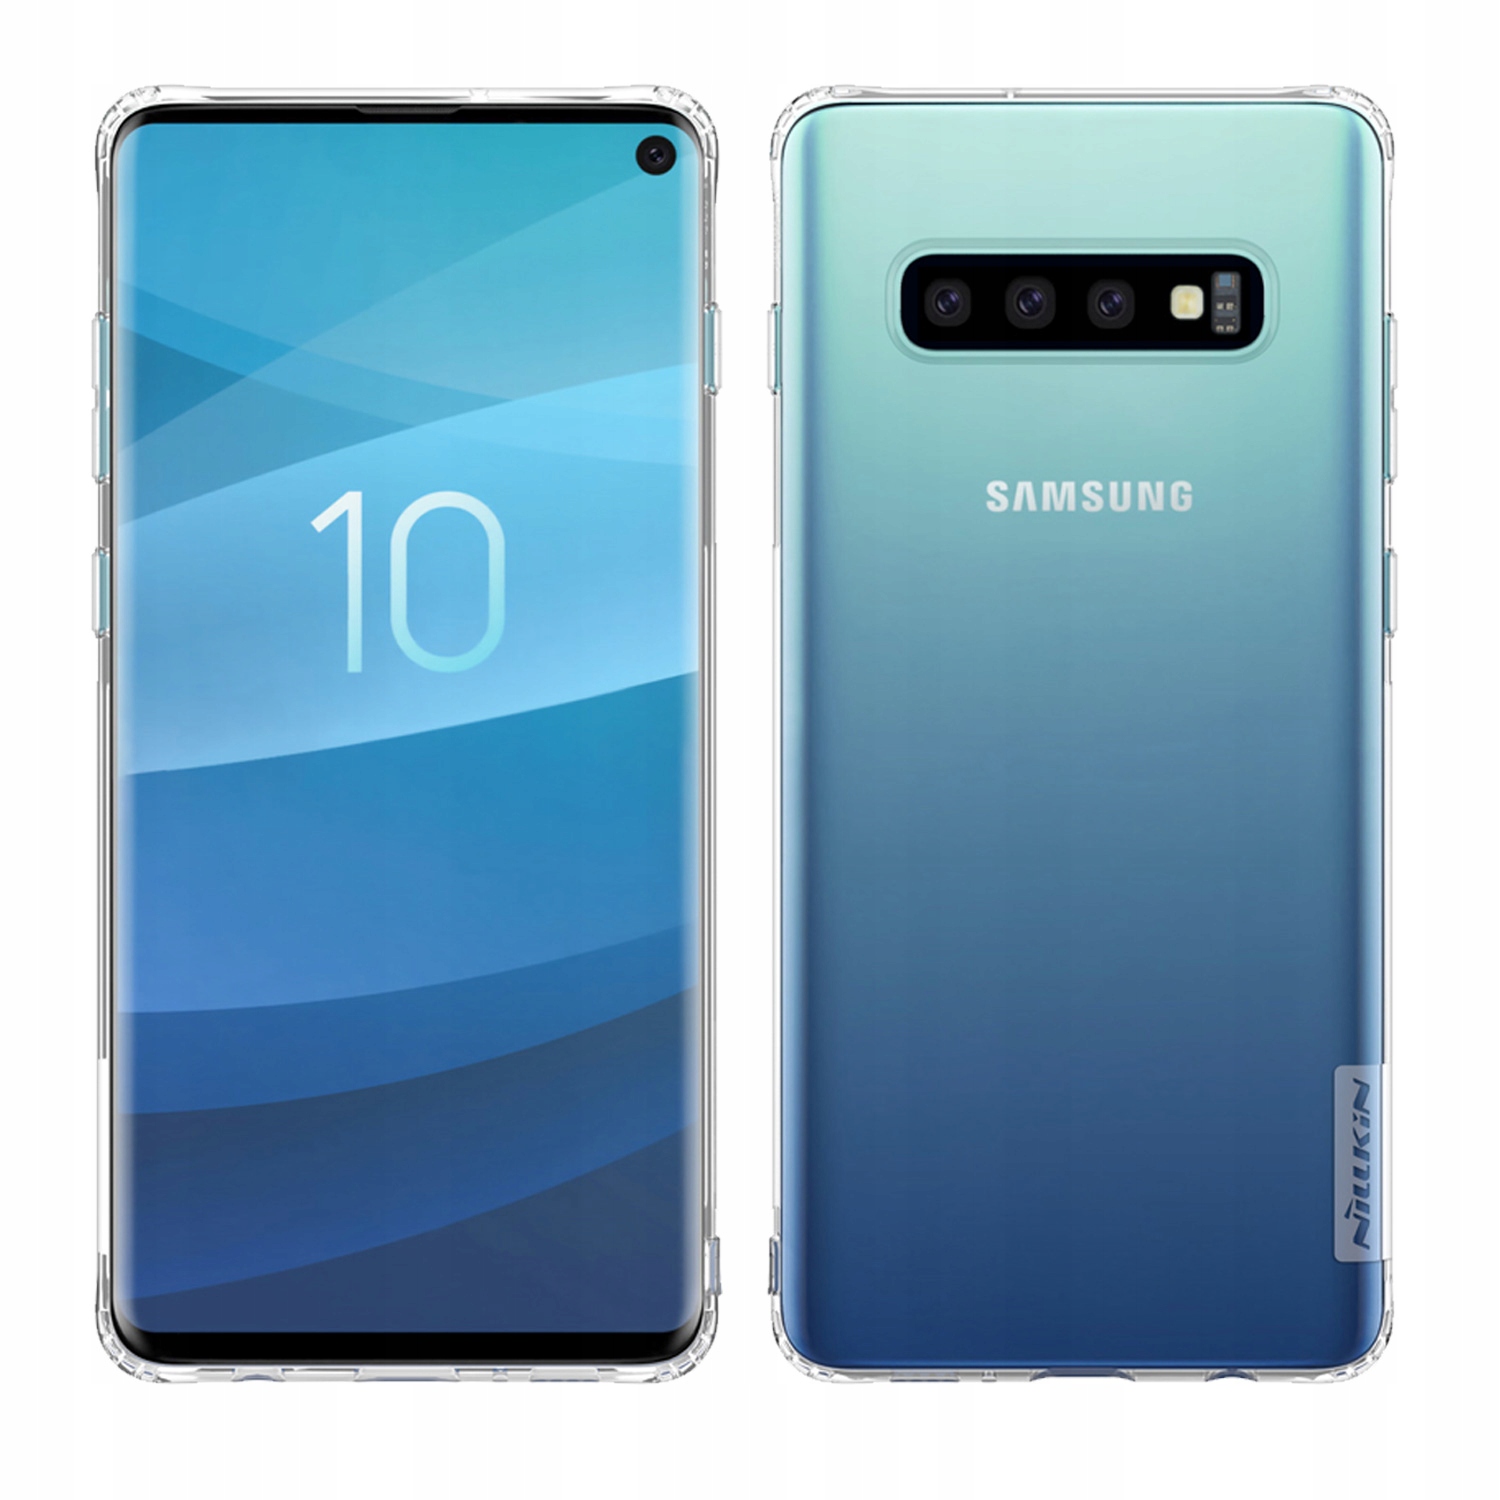 Куплю самсунг s10 новый. Samsung Galaxy s10. Samsung Galaxy s10 Plus. A10s Samsung Price. Смартфон Samsung Galaxy a10s.